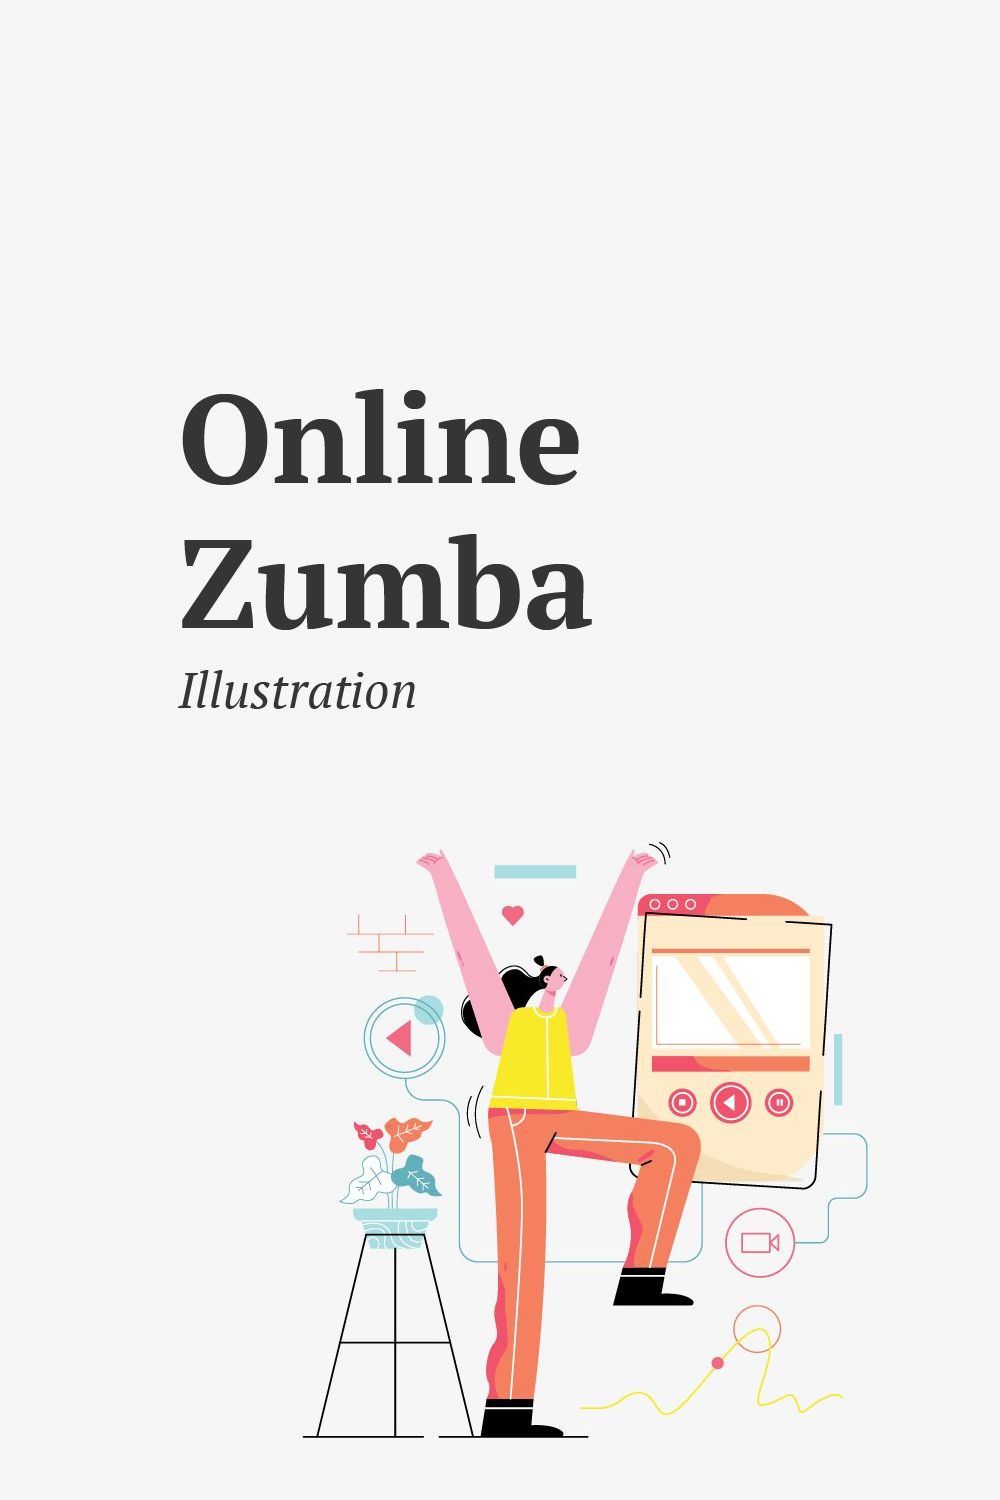 Online Zumba Illustration pinterest preview image.